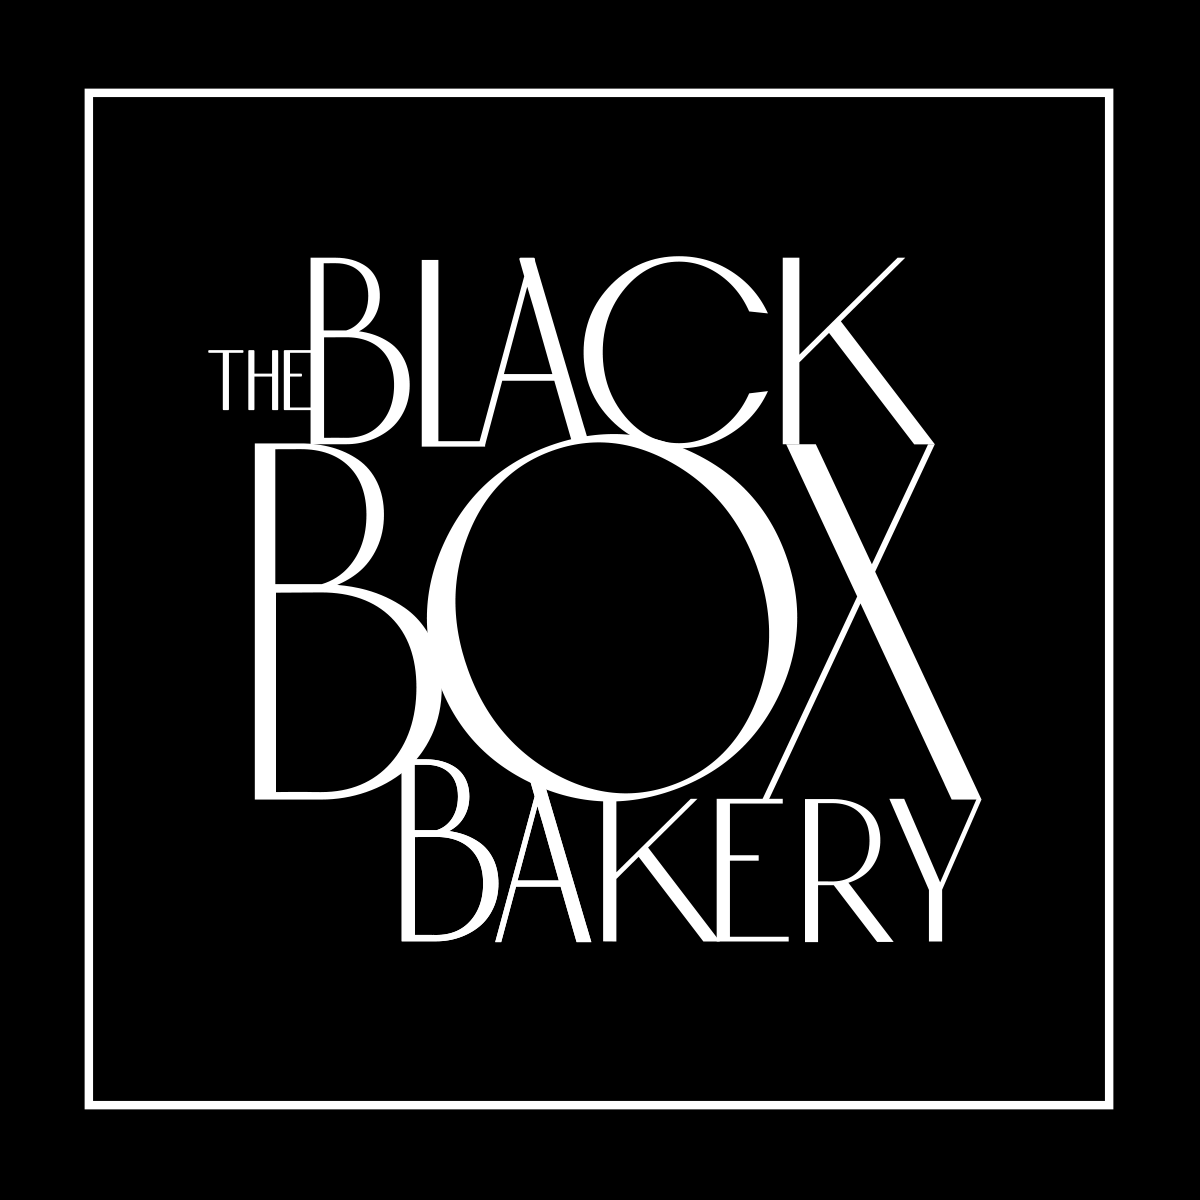 The Black Box Bakery